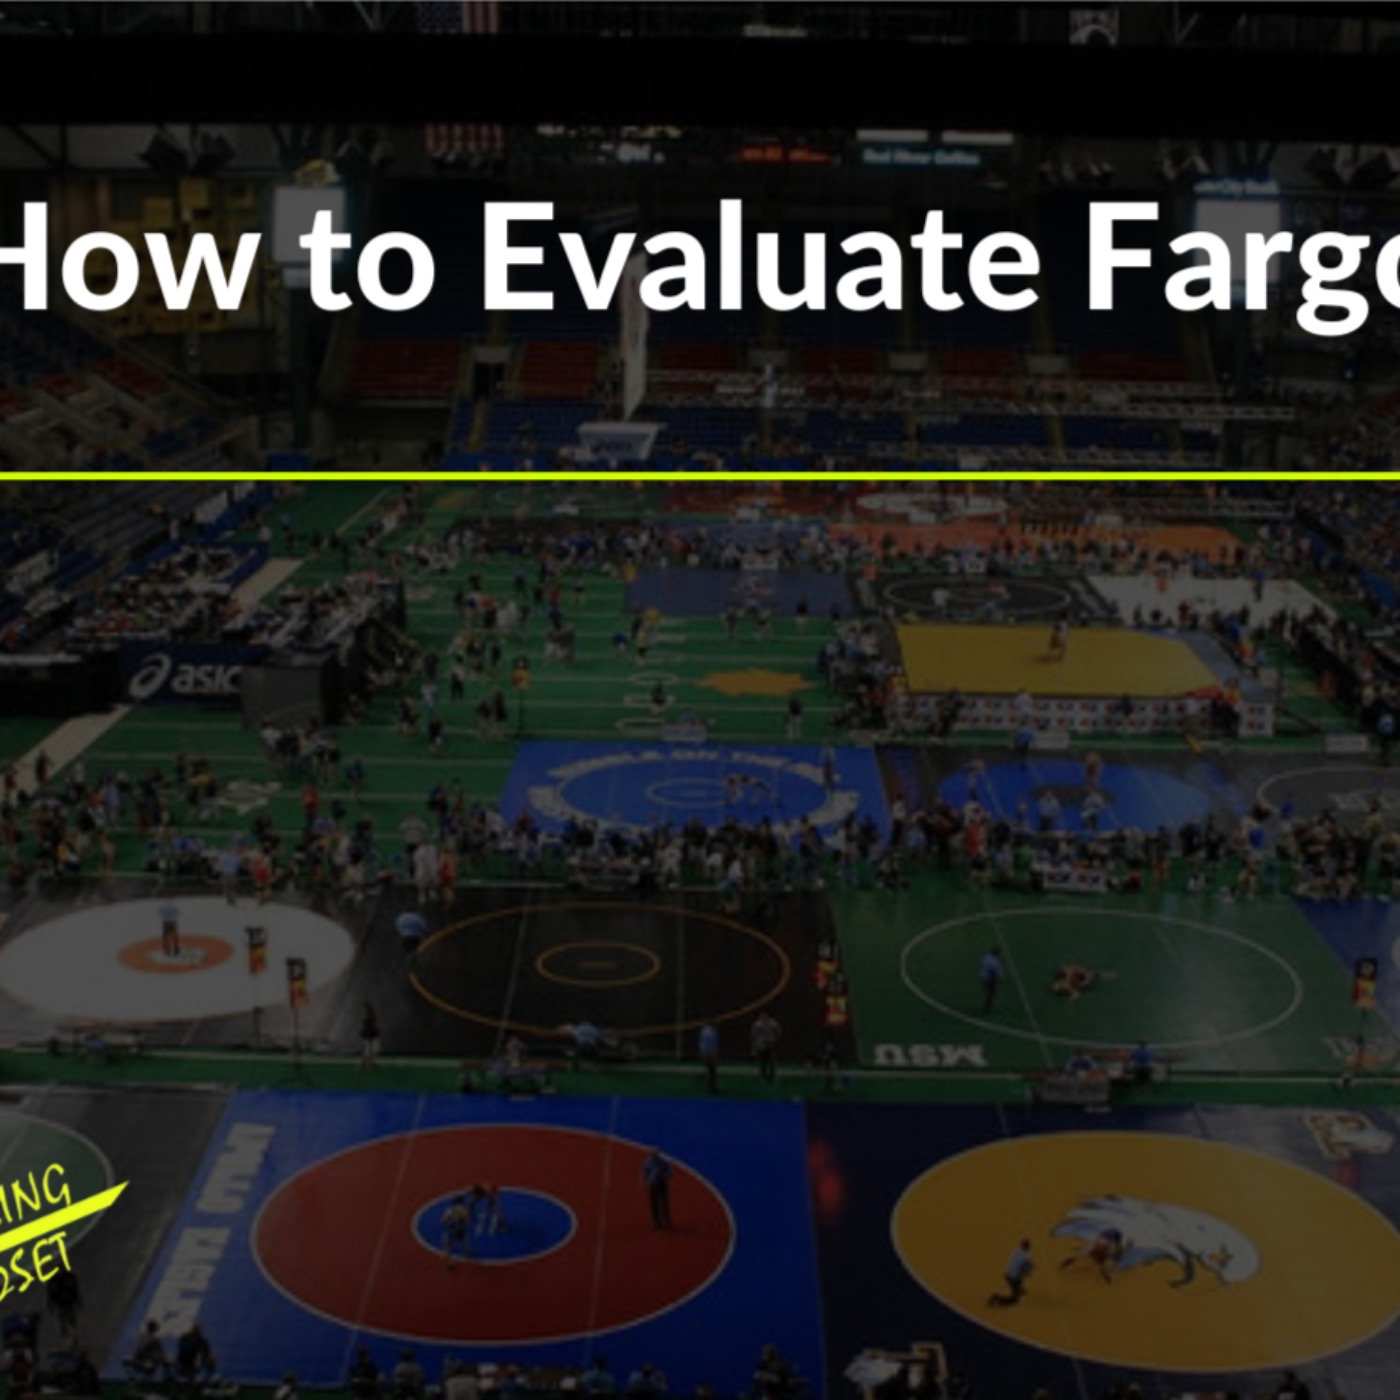 How to Evaluate Fargo